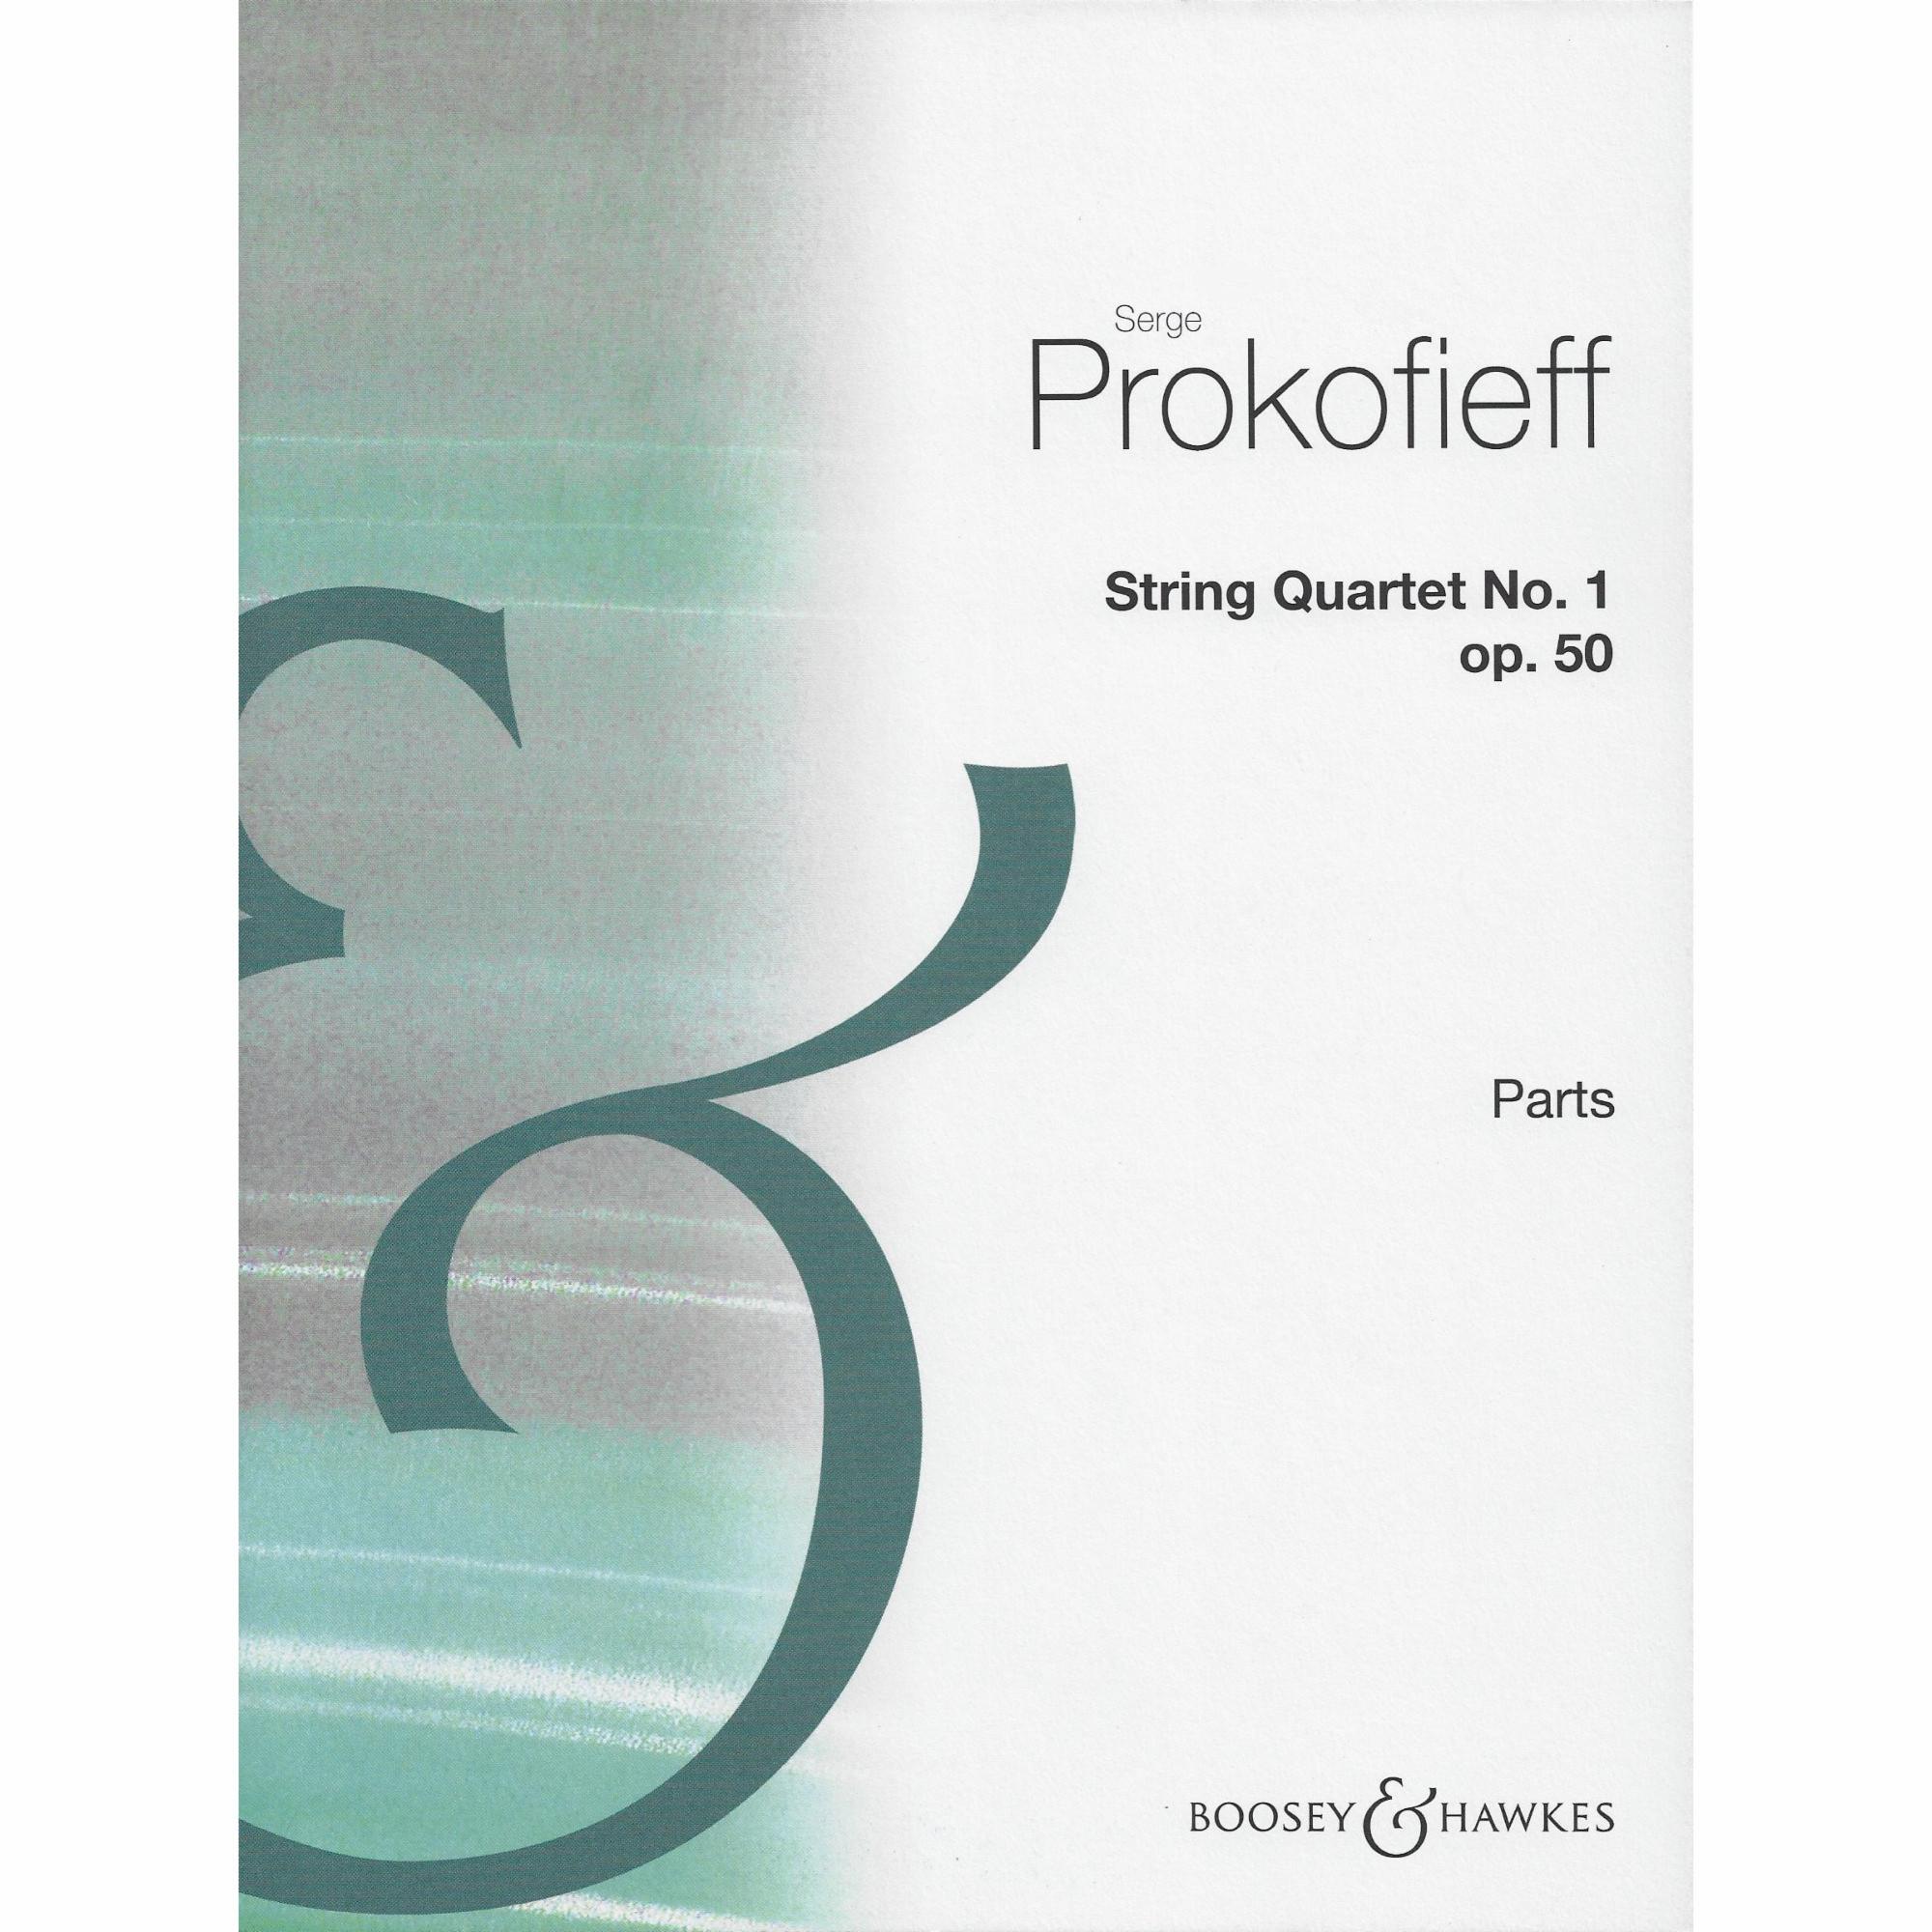 Prokofiev -- String Quartet No. 1, Op. 50